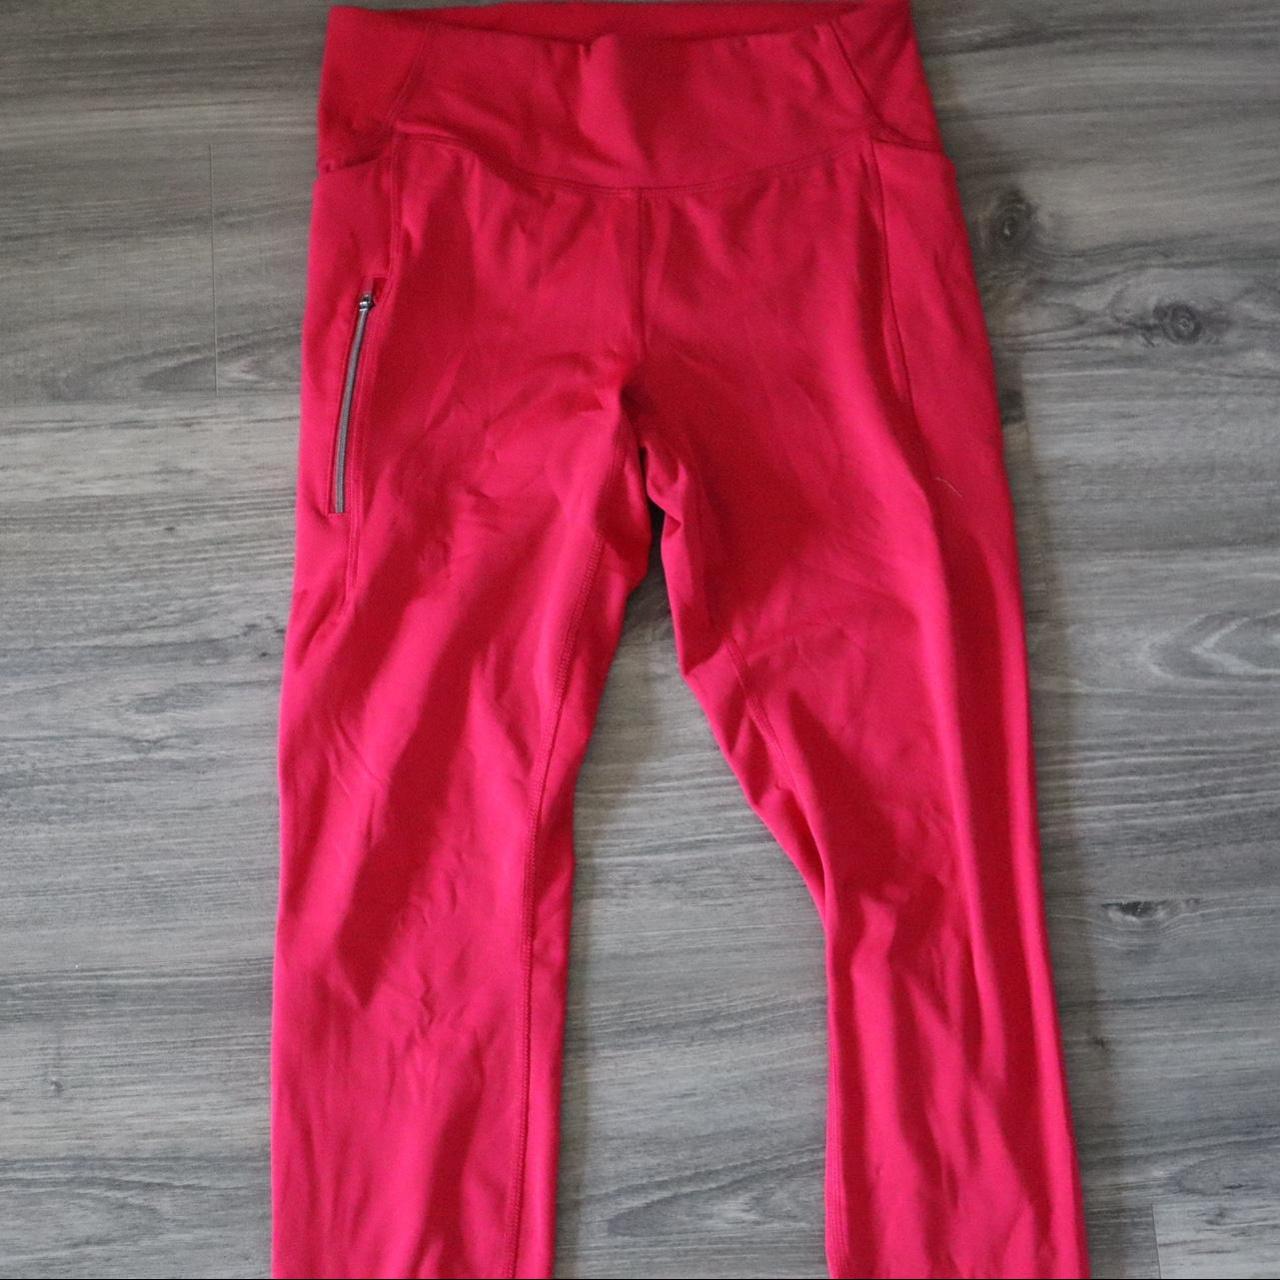 Red all in motion size medium leggings.